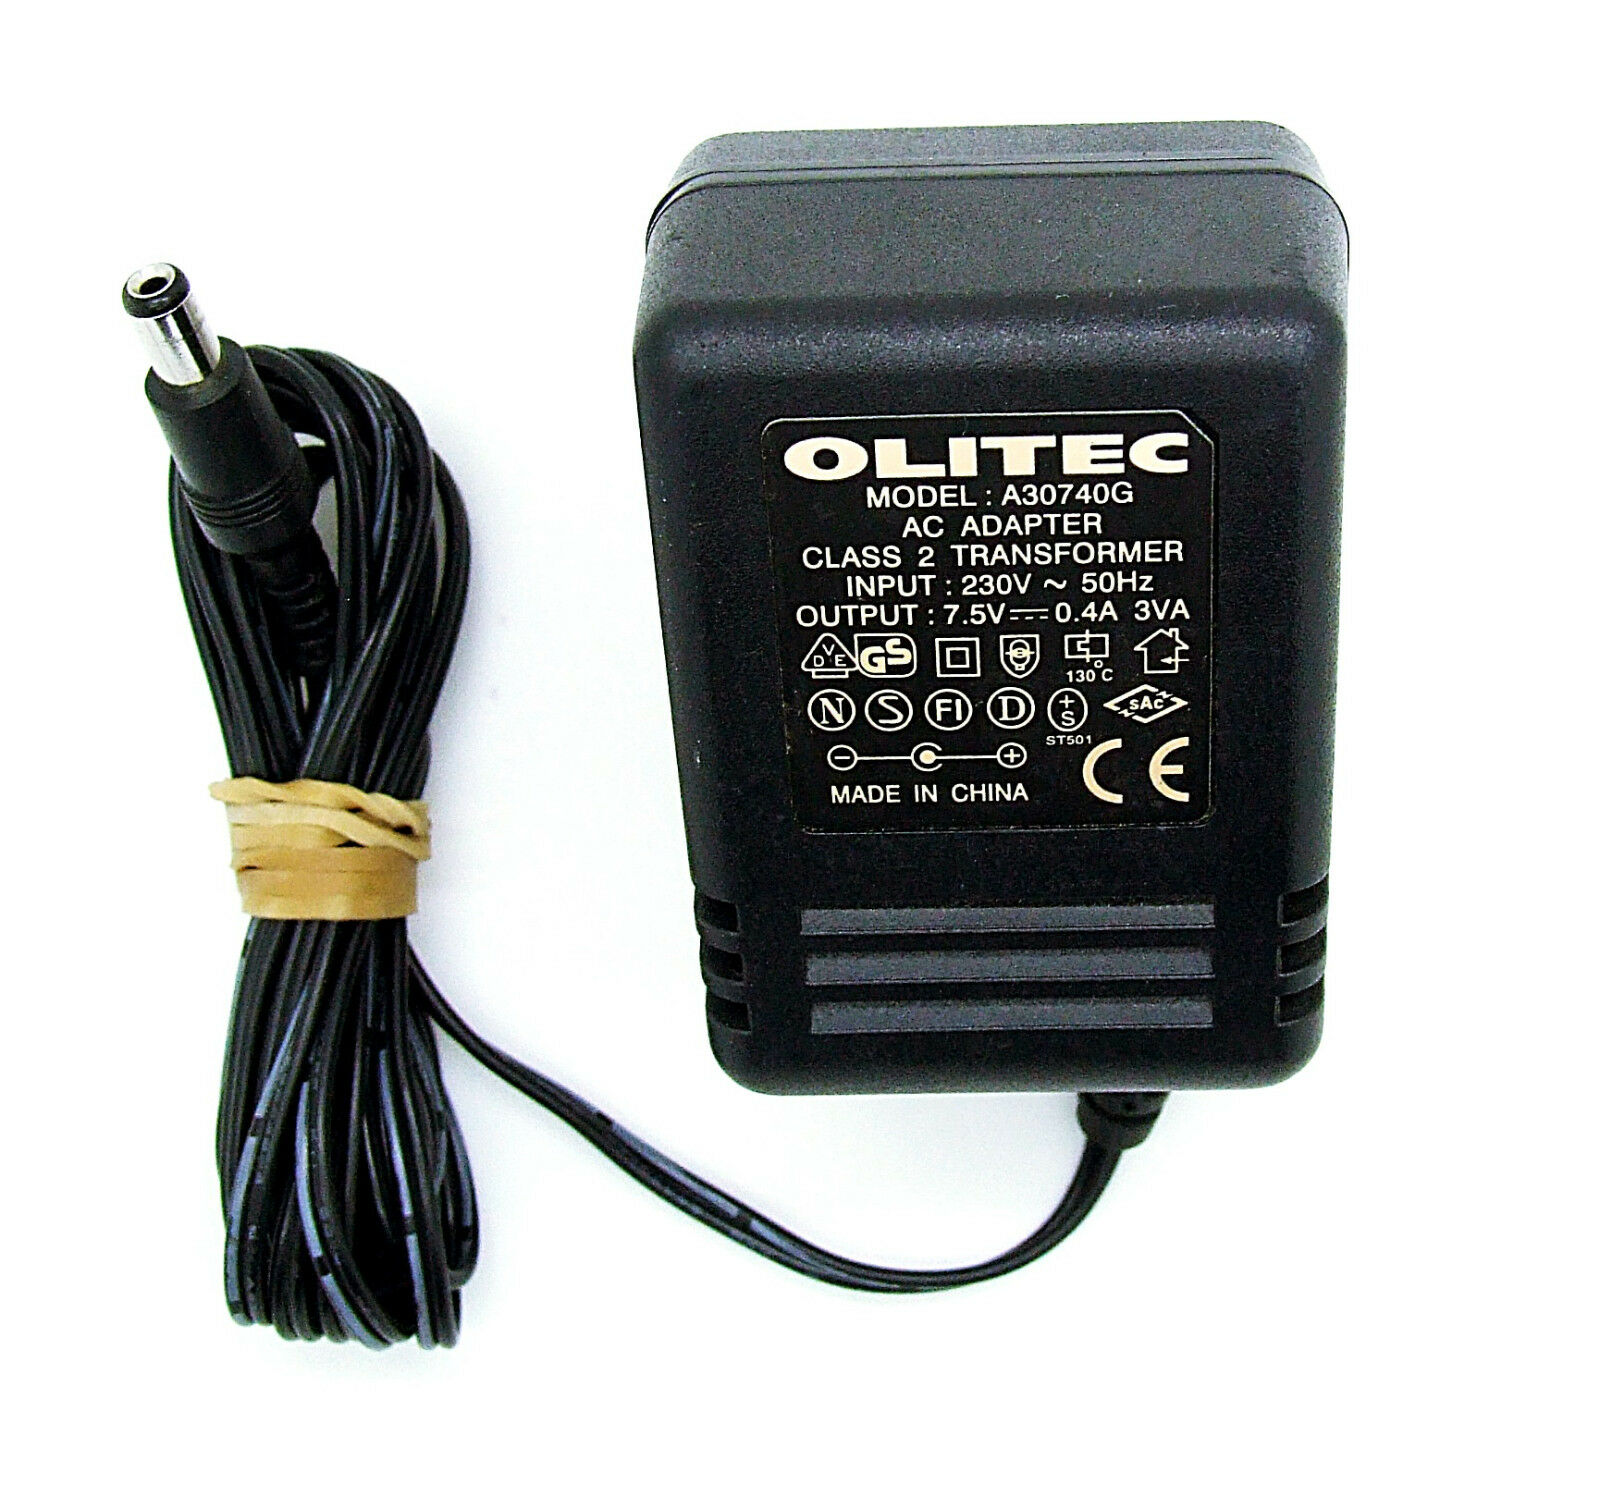 Original Olitec Power Supply a30740g AC Adapter 7,5v 0,4a Artikelbeschreibung Original Olitec Netzteil A30740G AC Ada - Click Image to Close